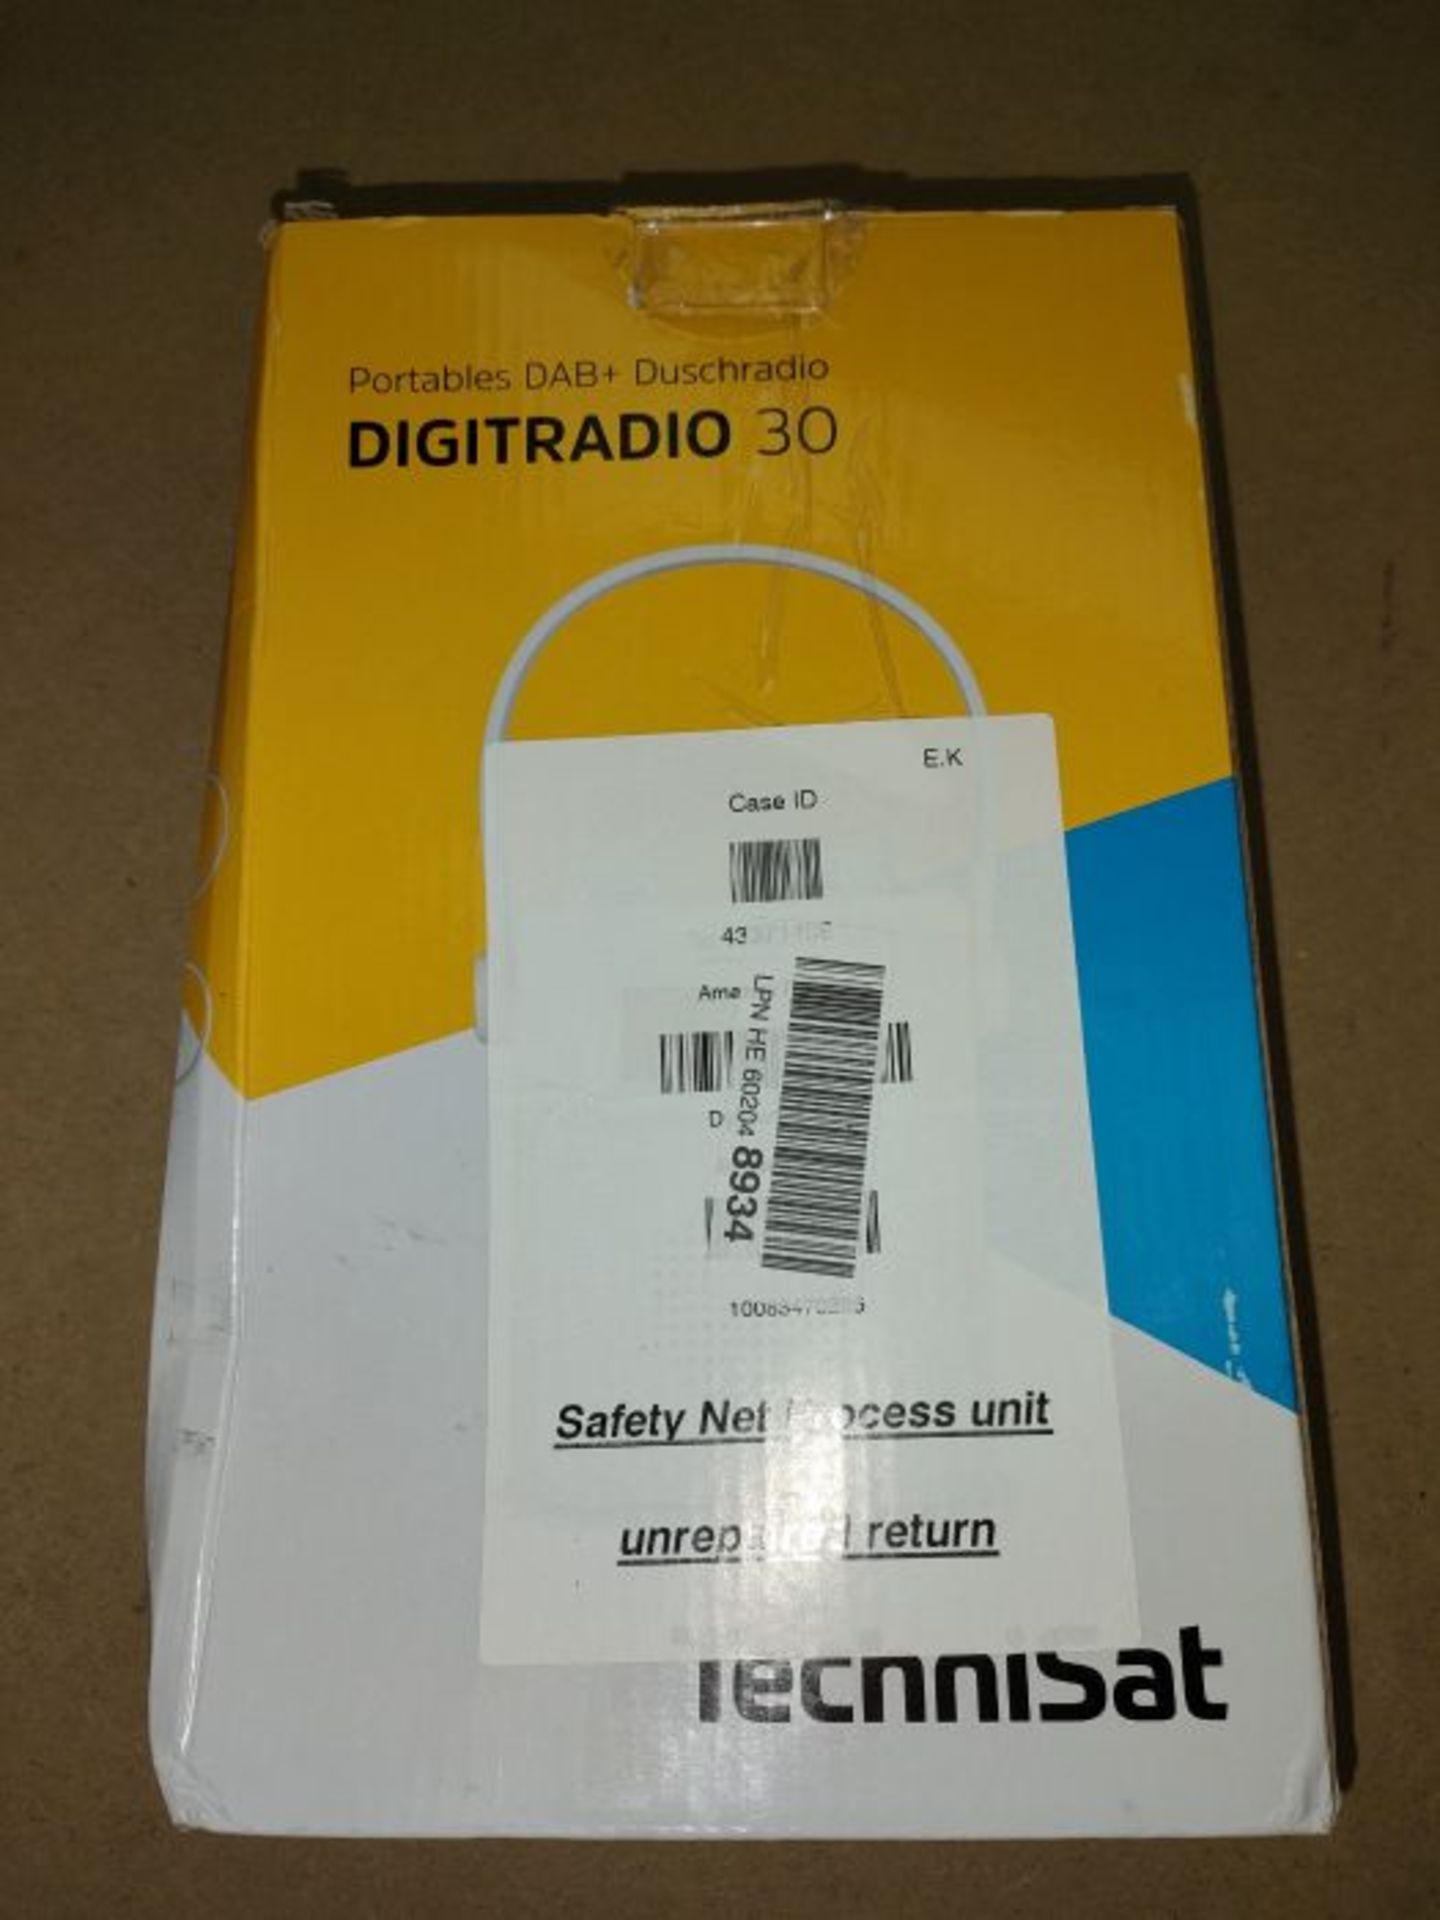 TechniSat DIGITRADIO 30 - wasserdichtes DAB+ Duschradio (UKW, DAB Digitalradio, integr